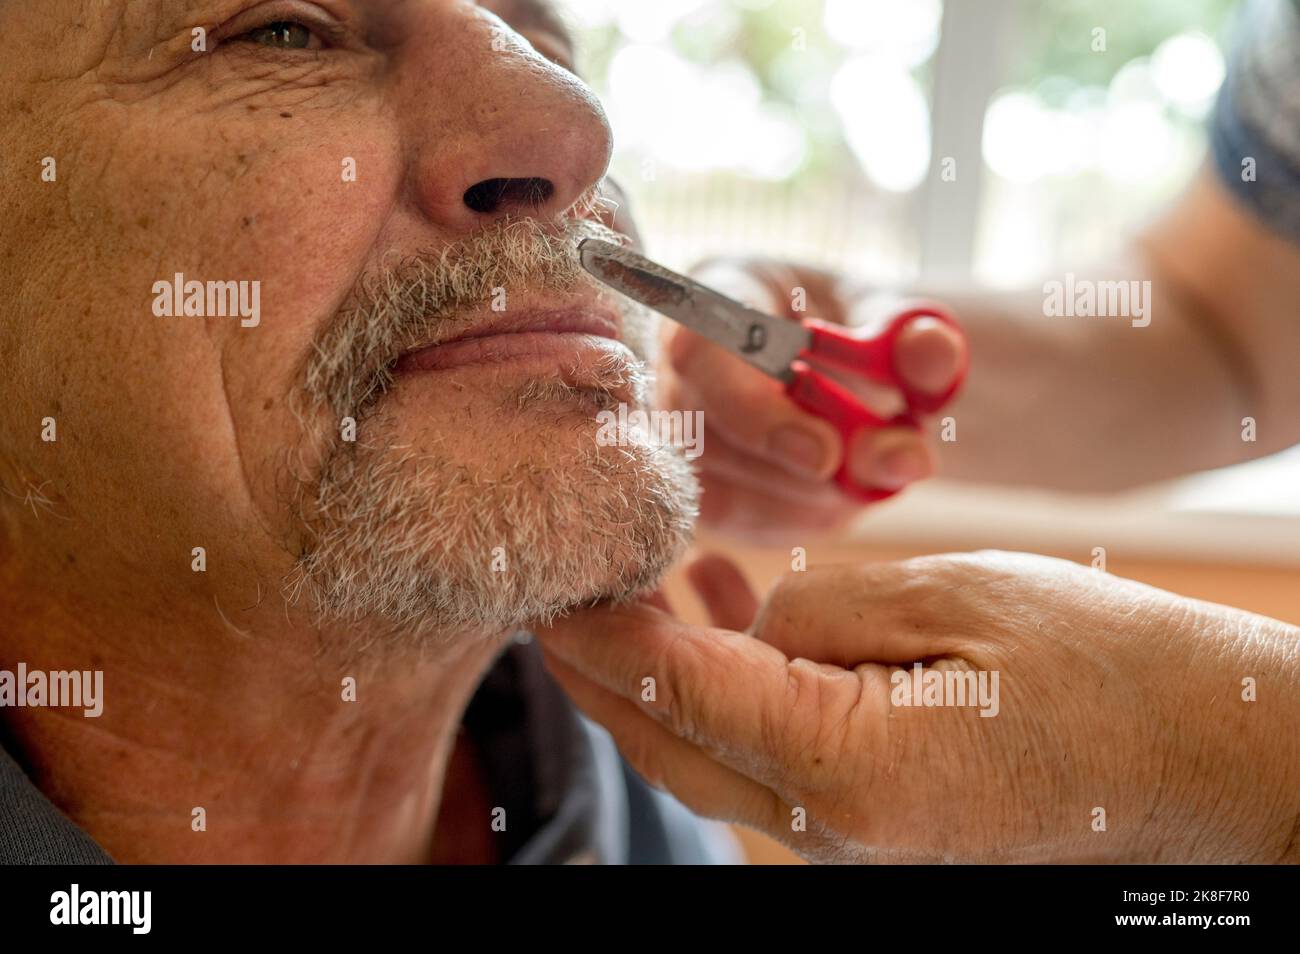 Hands of senior woman cutting man's mustache Stock Photo